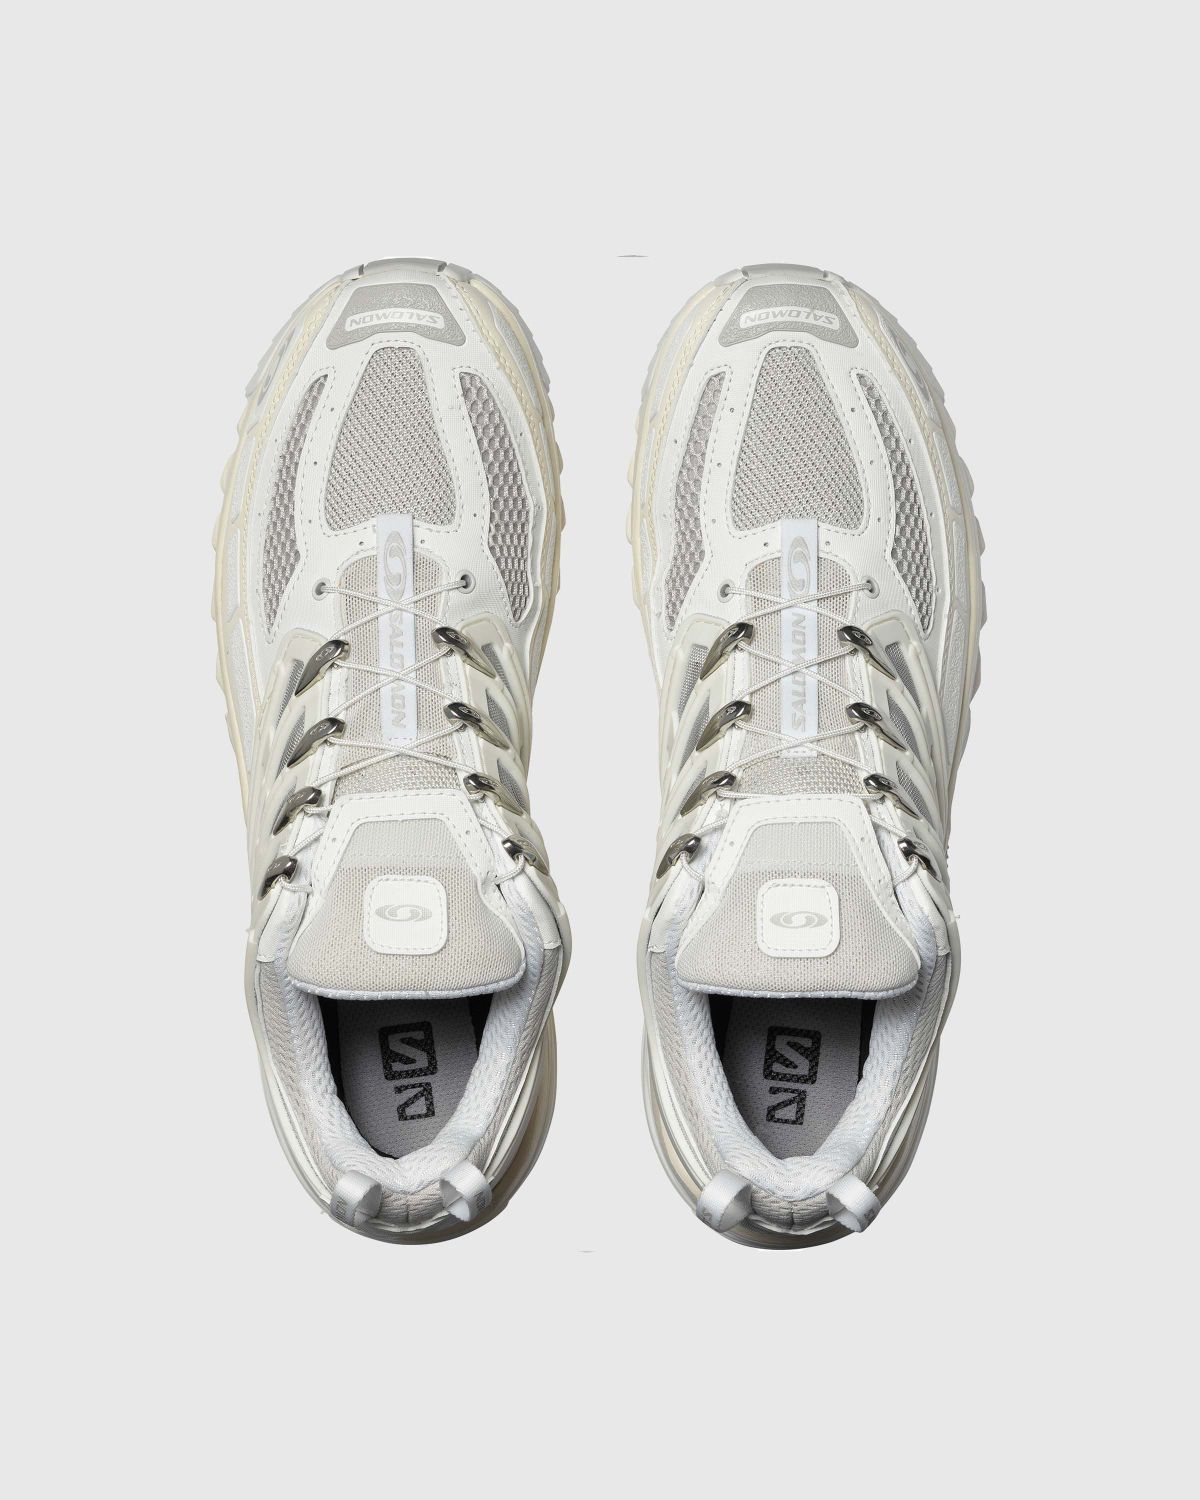 Salomon – ACS PRO White/Vanilla Ice/Lunar Rock - Low Top Sneakers - White - Image 4